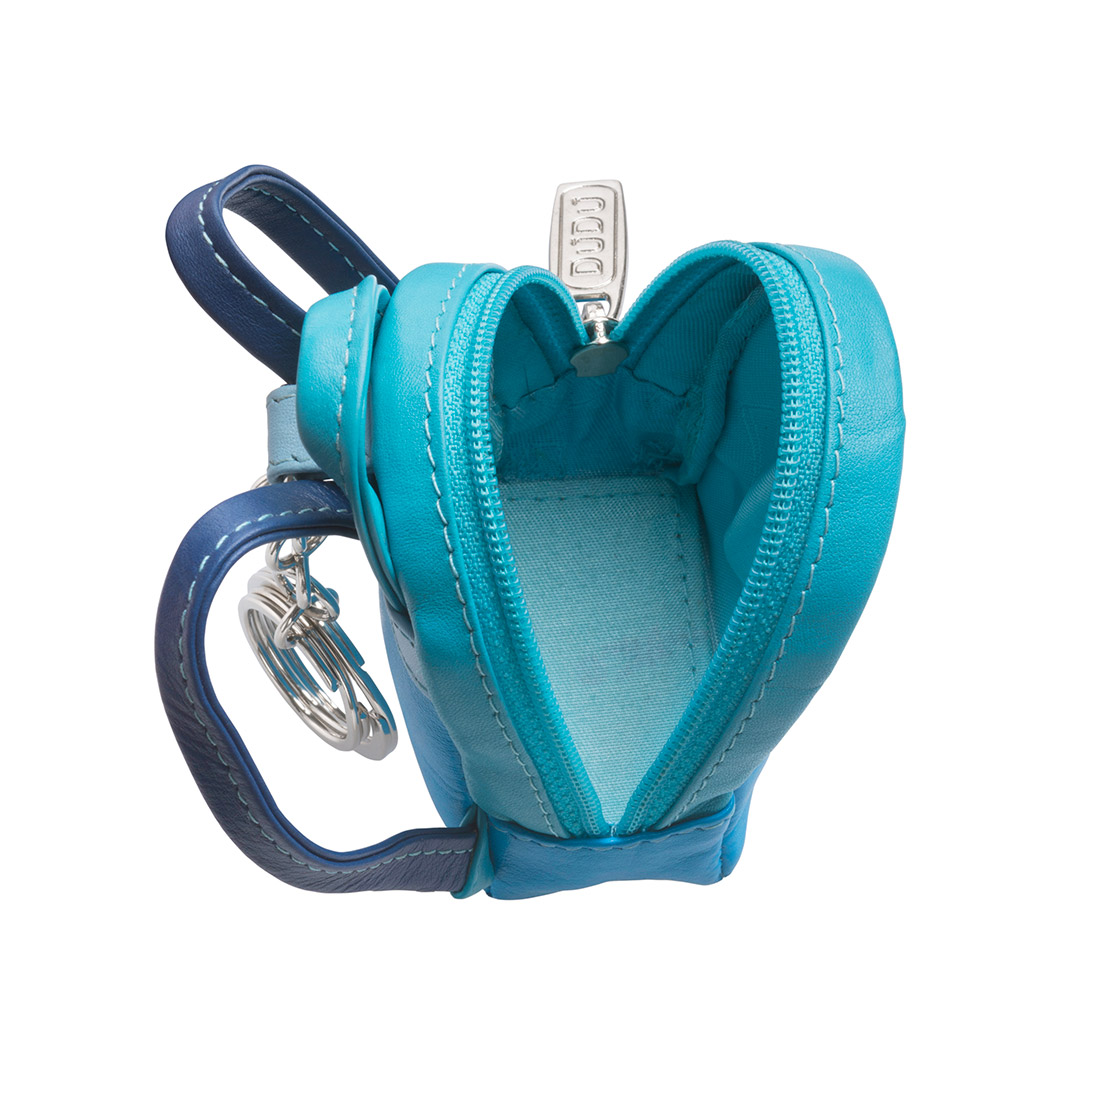 Porte-clés - Collection Colorful - Santorini - Bleu - Unisexe